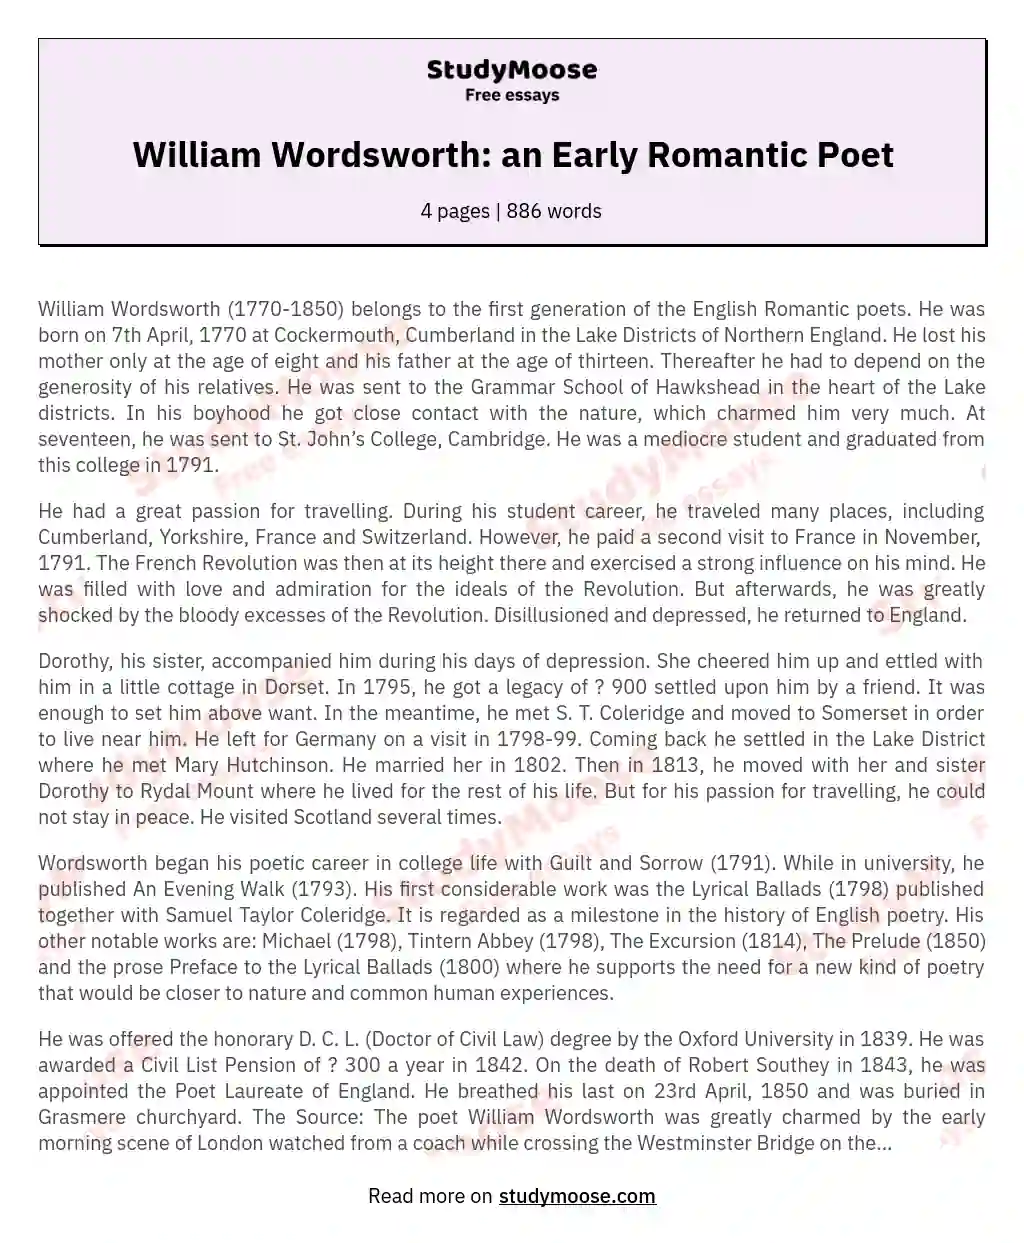 William Wordsworth: an Early Romantic Poet essay